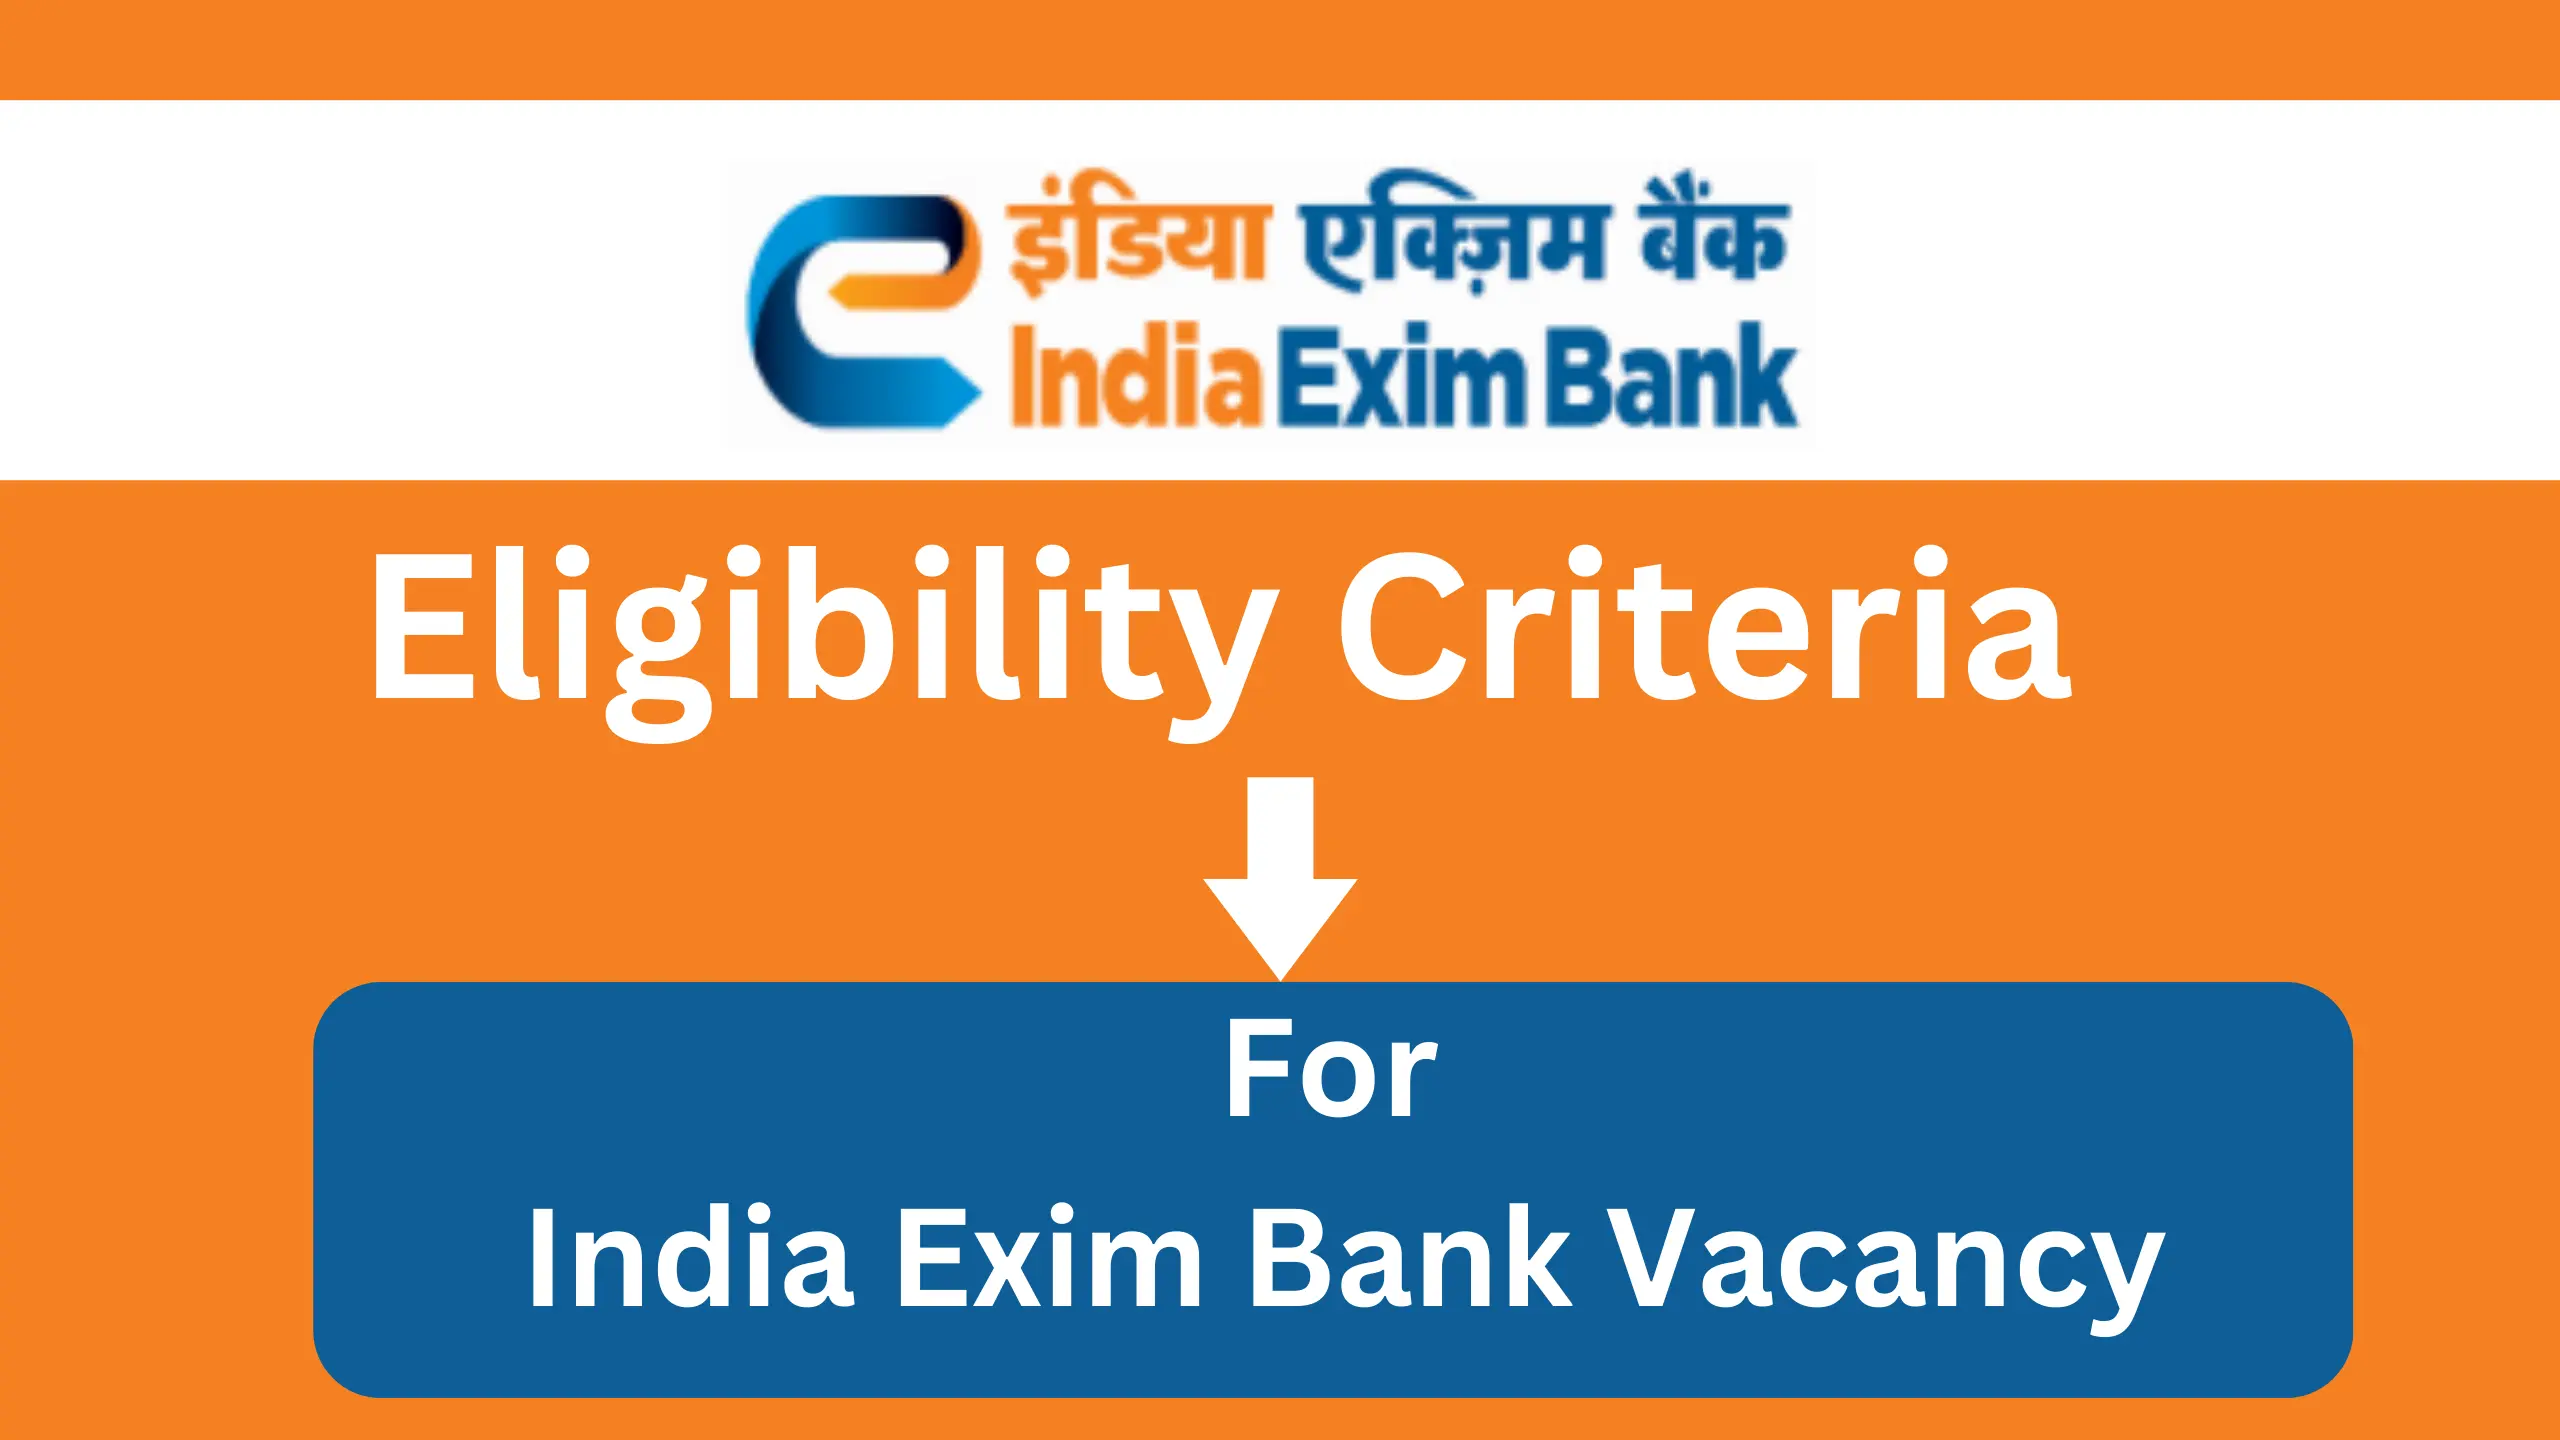 Eligibility Criteria for India Exim Bank Vacancy